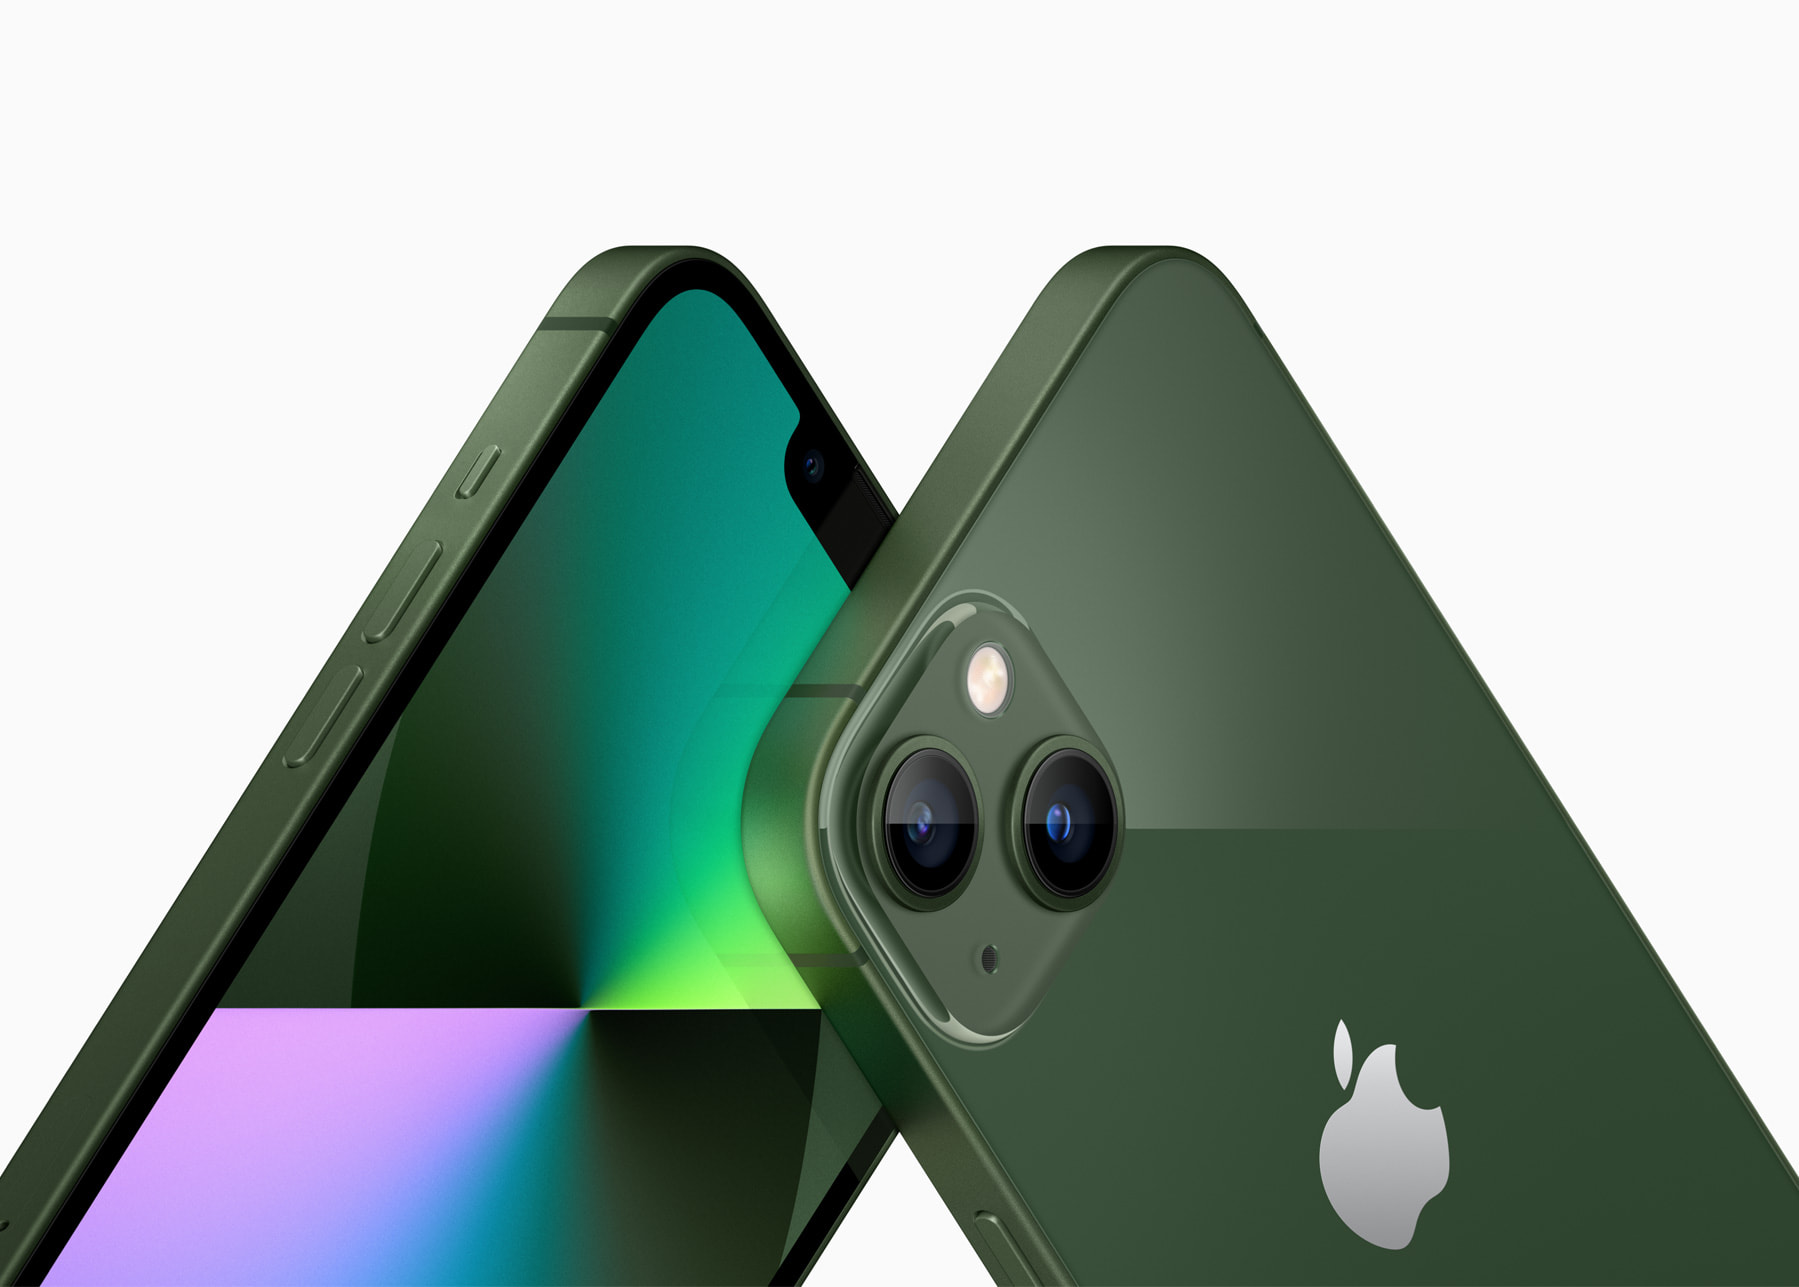 Is green iPhone popular?